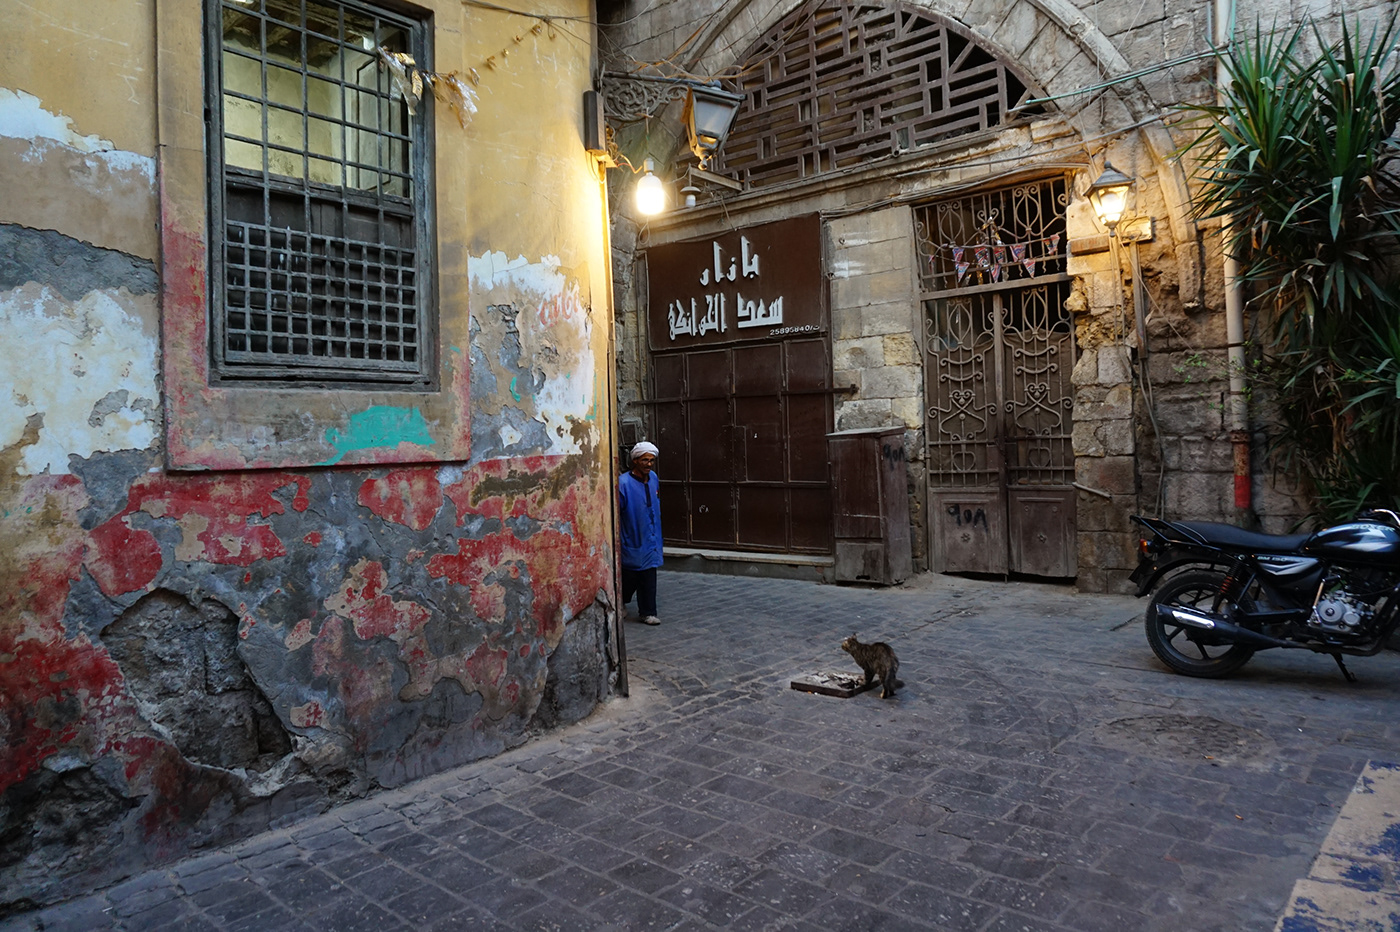 cairo egypt arabic islamic muslim architecture exterior Ancient history slum